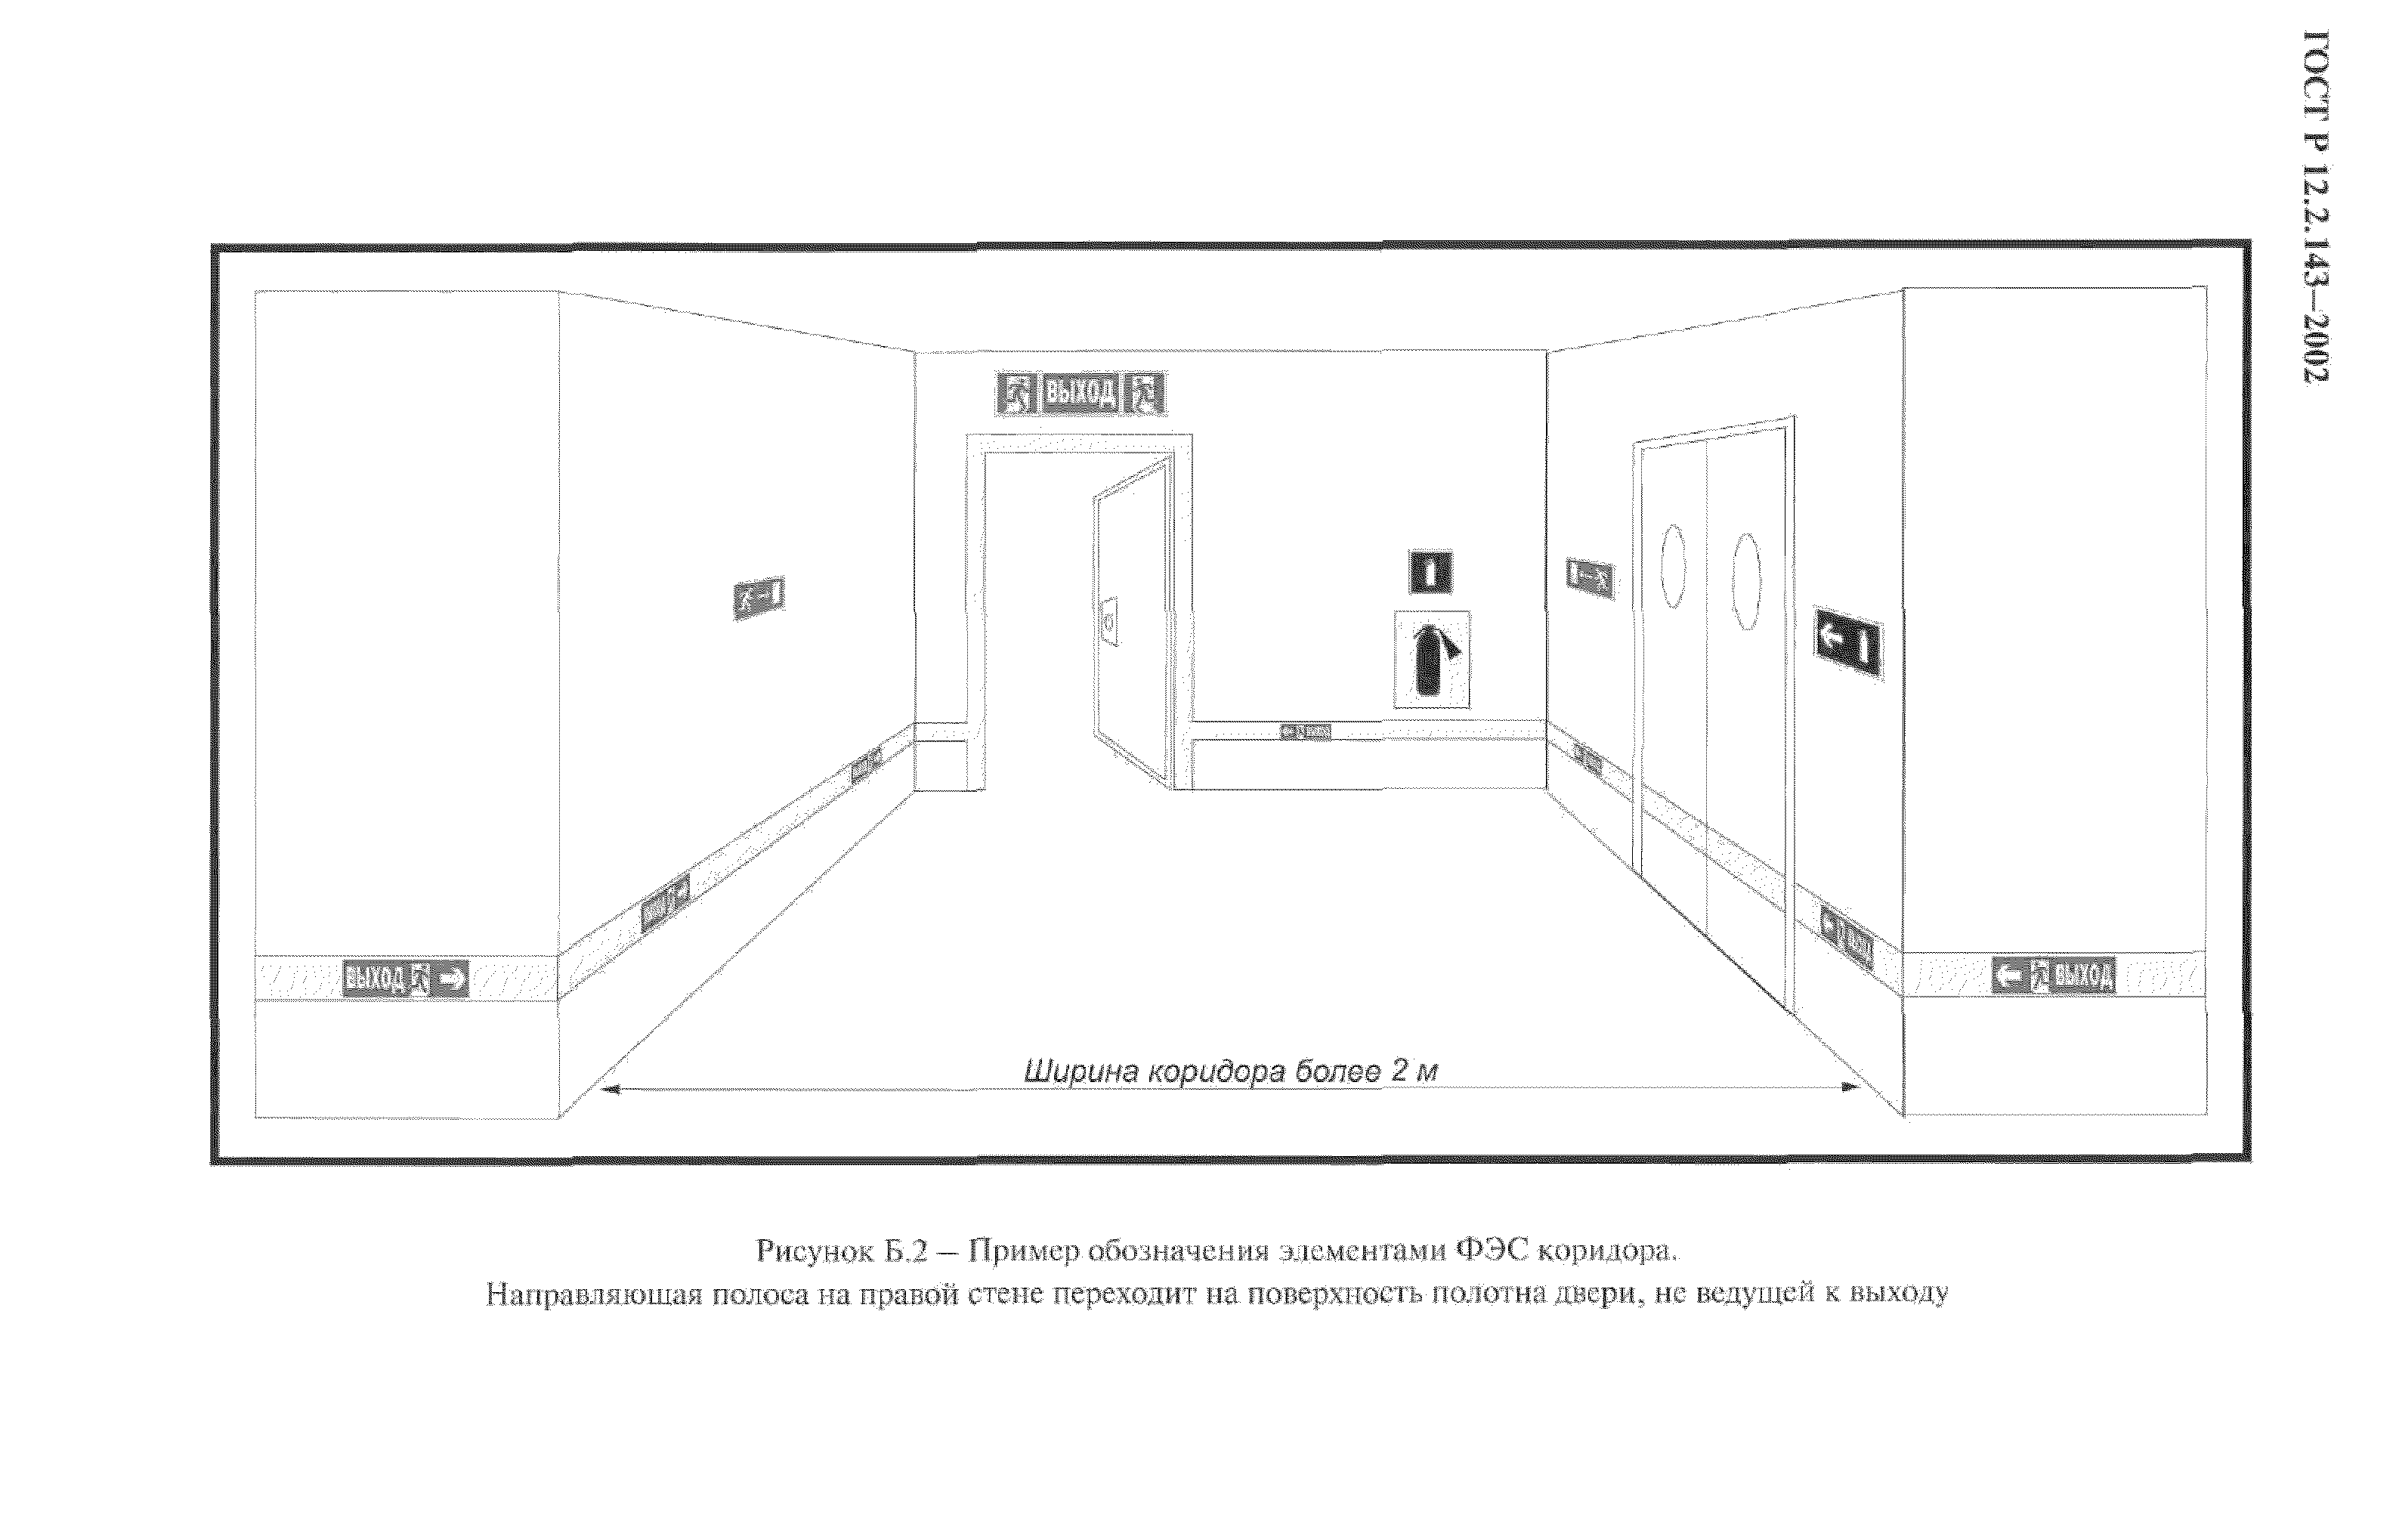 ГОСТ Р 12.2.143-2002